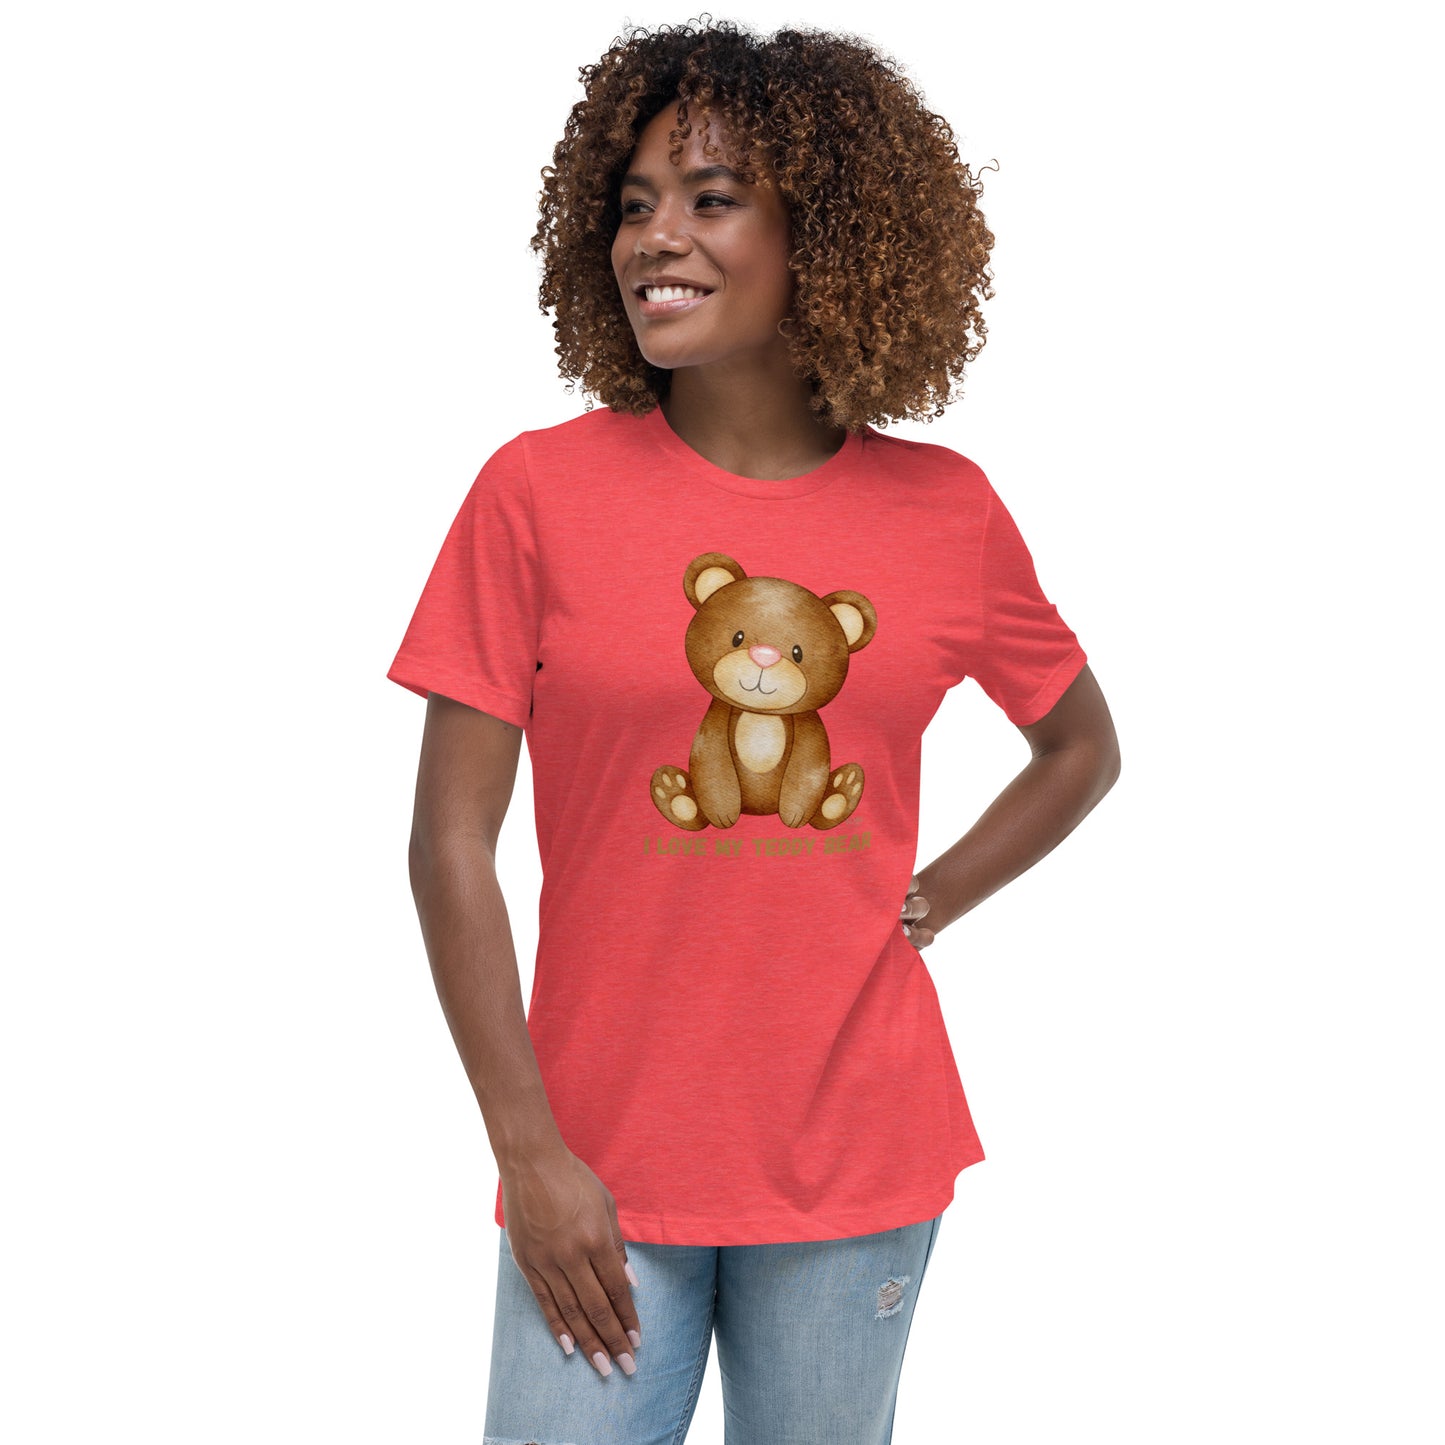 Women's Relaxed Soft & Smooth Premium Quality T-Shirt I Love My Teddy Bear Design by IOBI Original Apparel